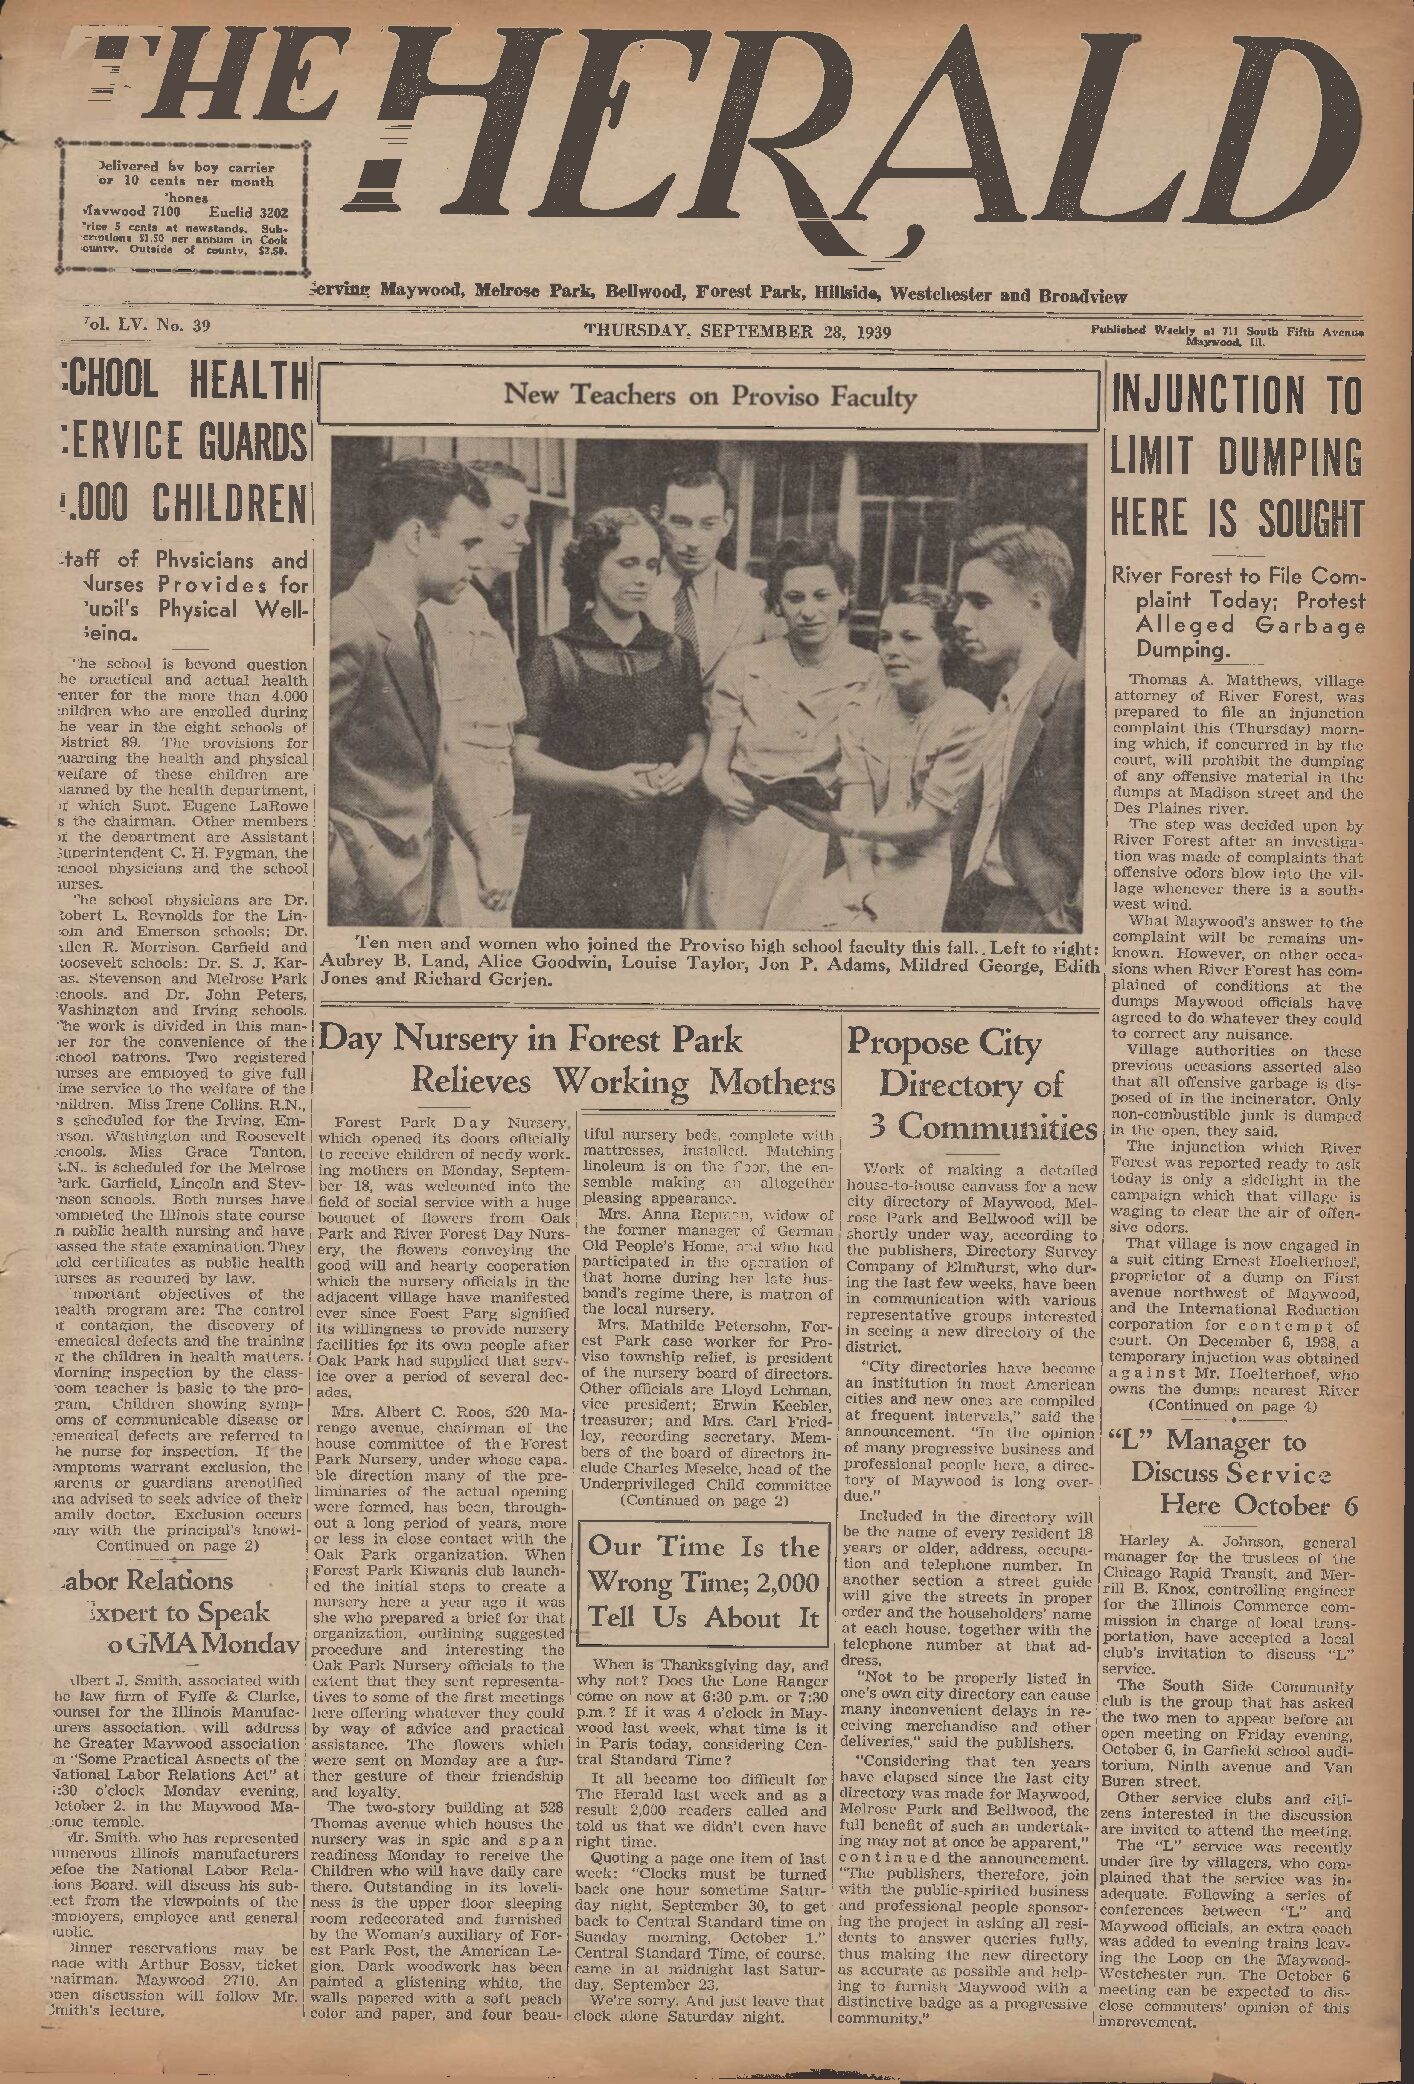 The Herald – 19390928